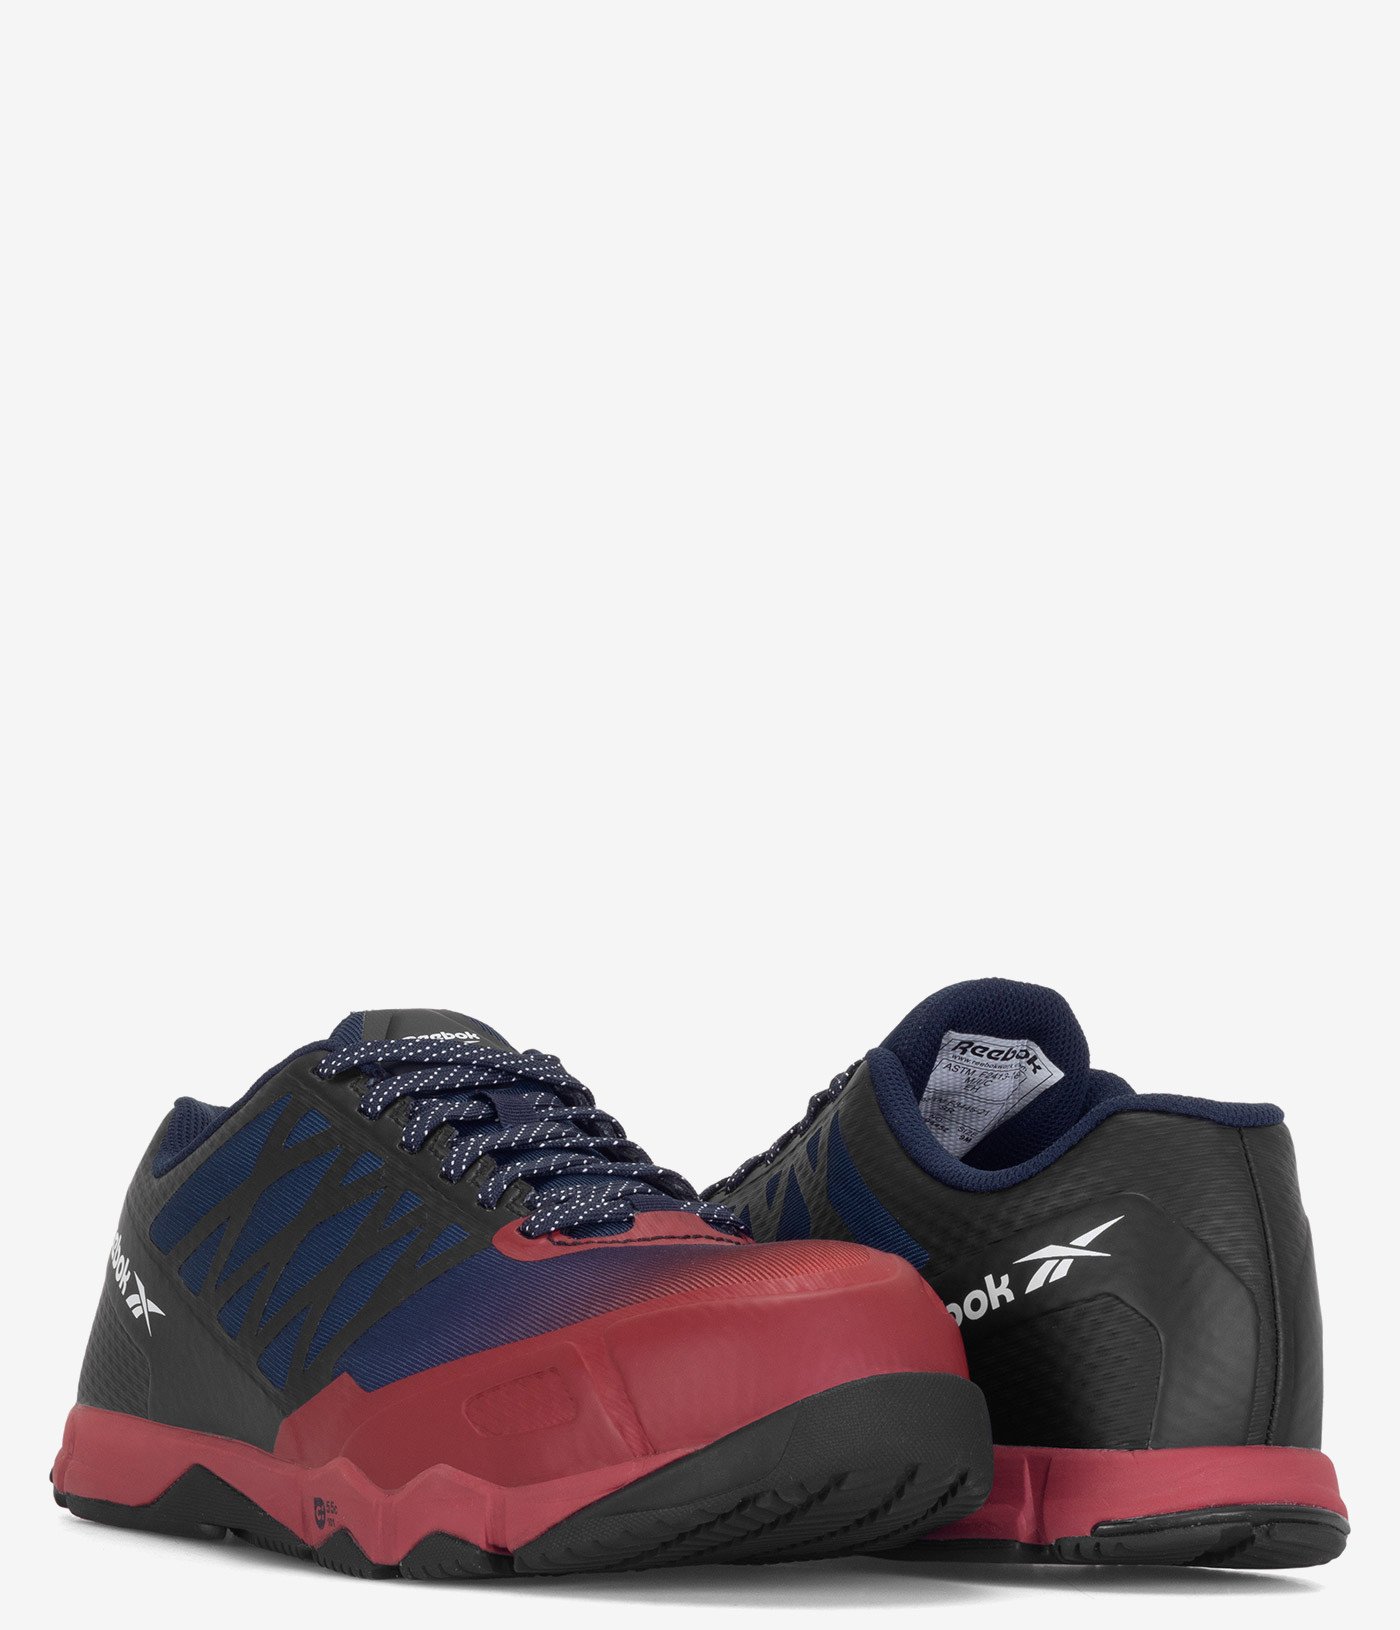 Reebok Speed TR Composite Toe Athletic Work Shoe | Pair